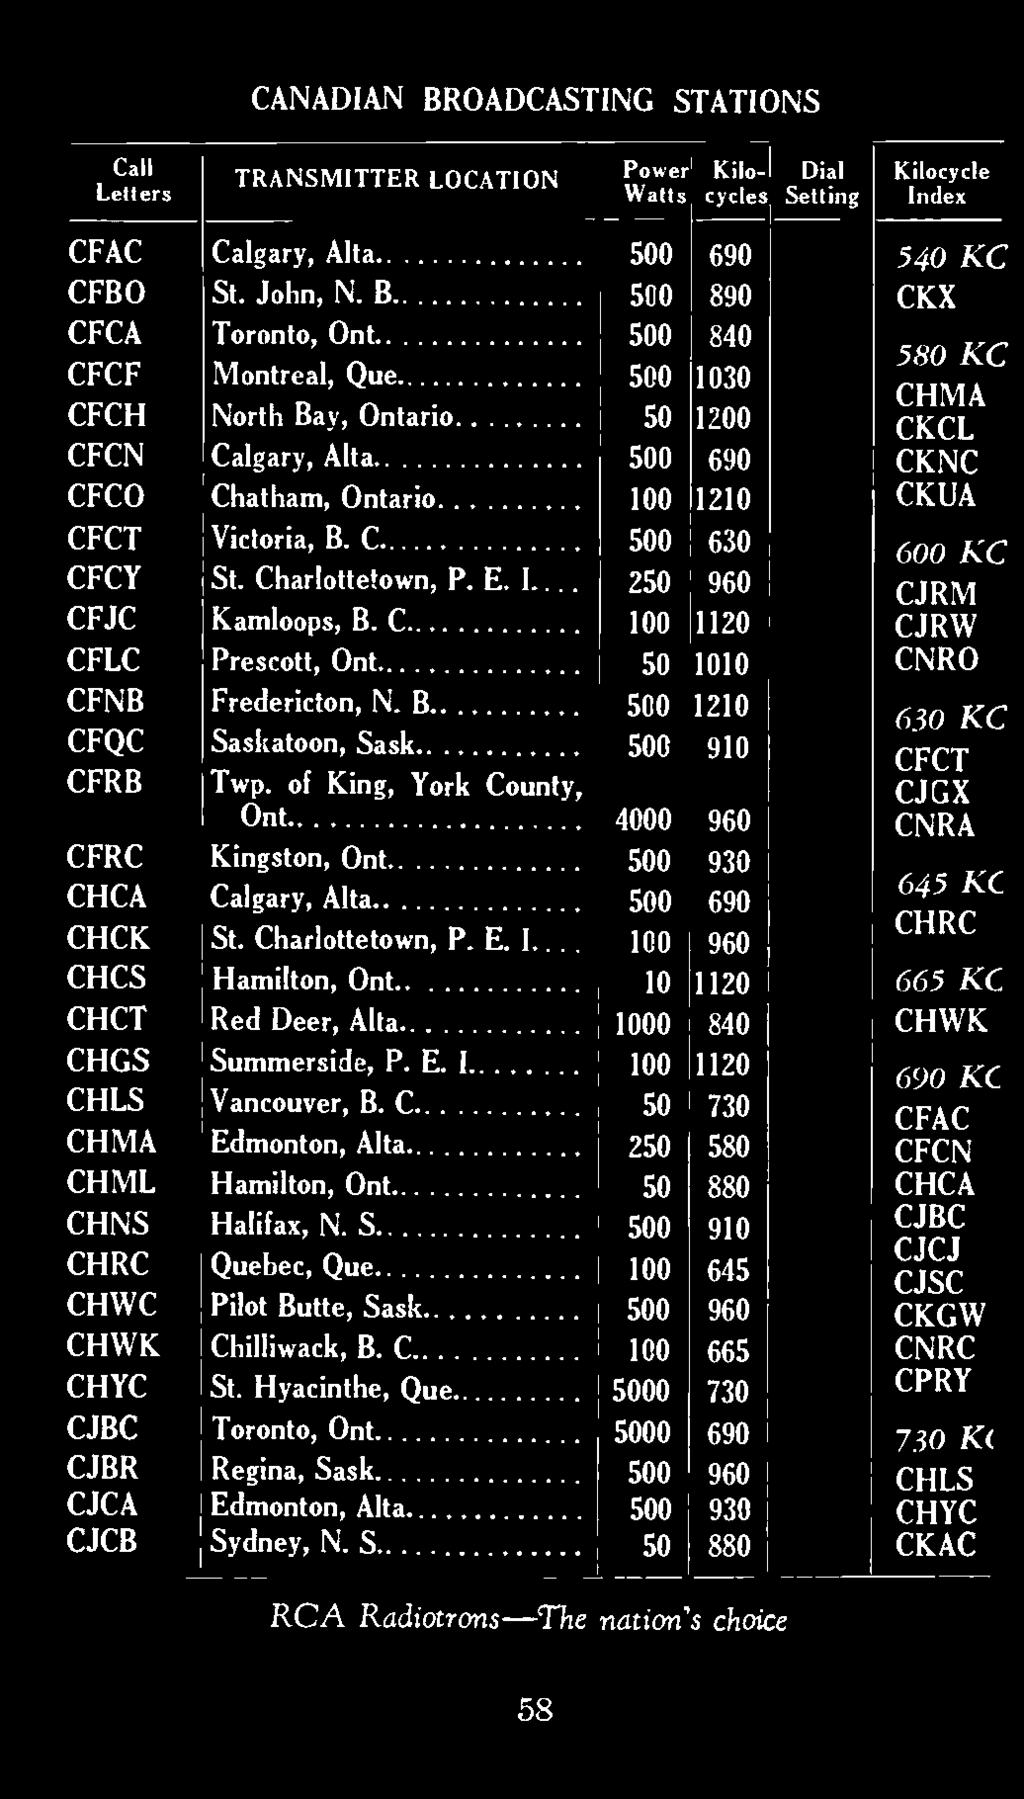 I... 250 960 CJRM CFJC Kamloops, B. C. 1120 CJRW CFLC Prescott, Ont. 50 1010 CNRO CFNB Fredericton, N. B. 1210 630 KC CFQC Saskatoon, Sask.. 910 CFRB Twp. of King, York County, Ont.